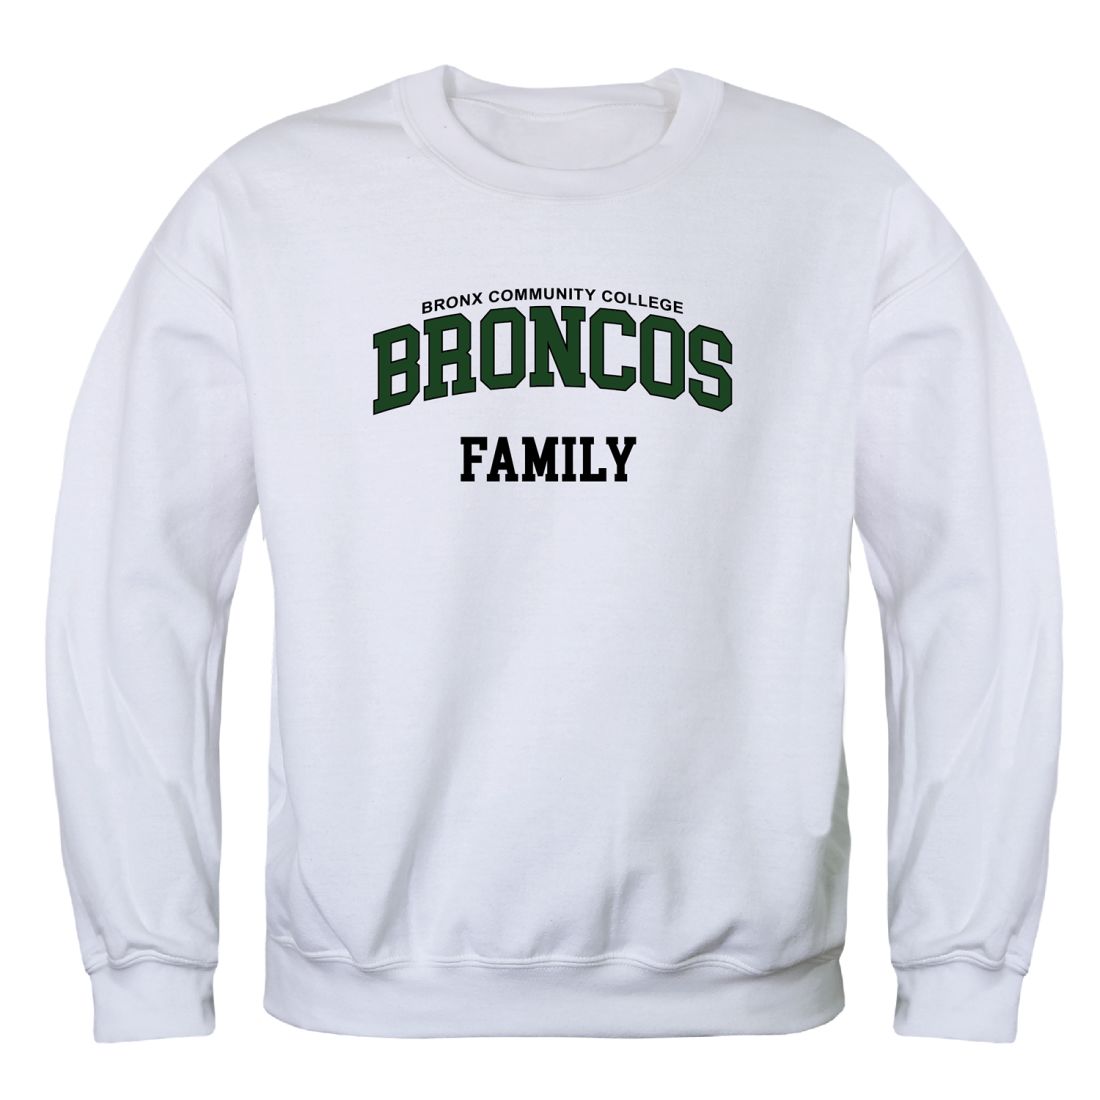 Bronx-Community-College-Broncos-Family-Fleece-Crewneck-Pullover-Sweatshirt